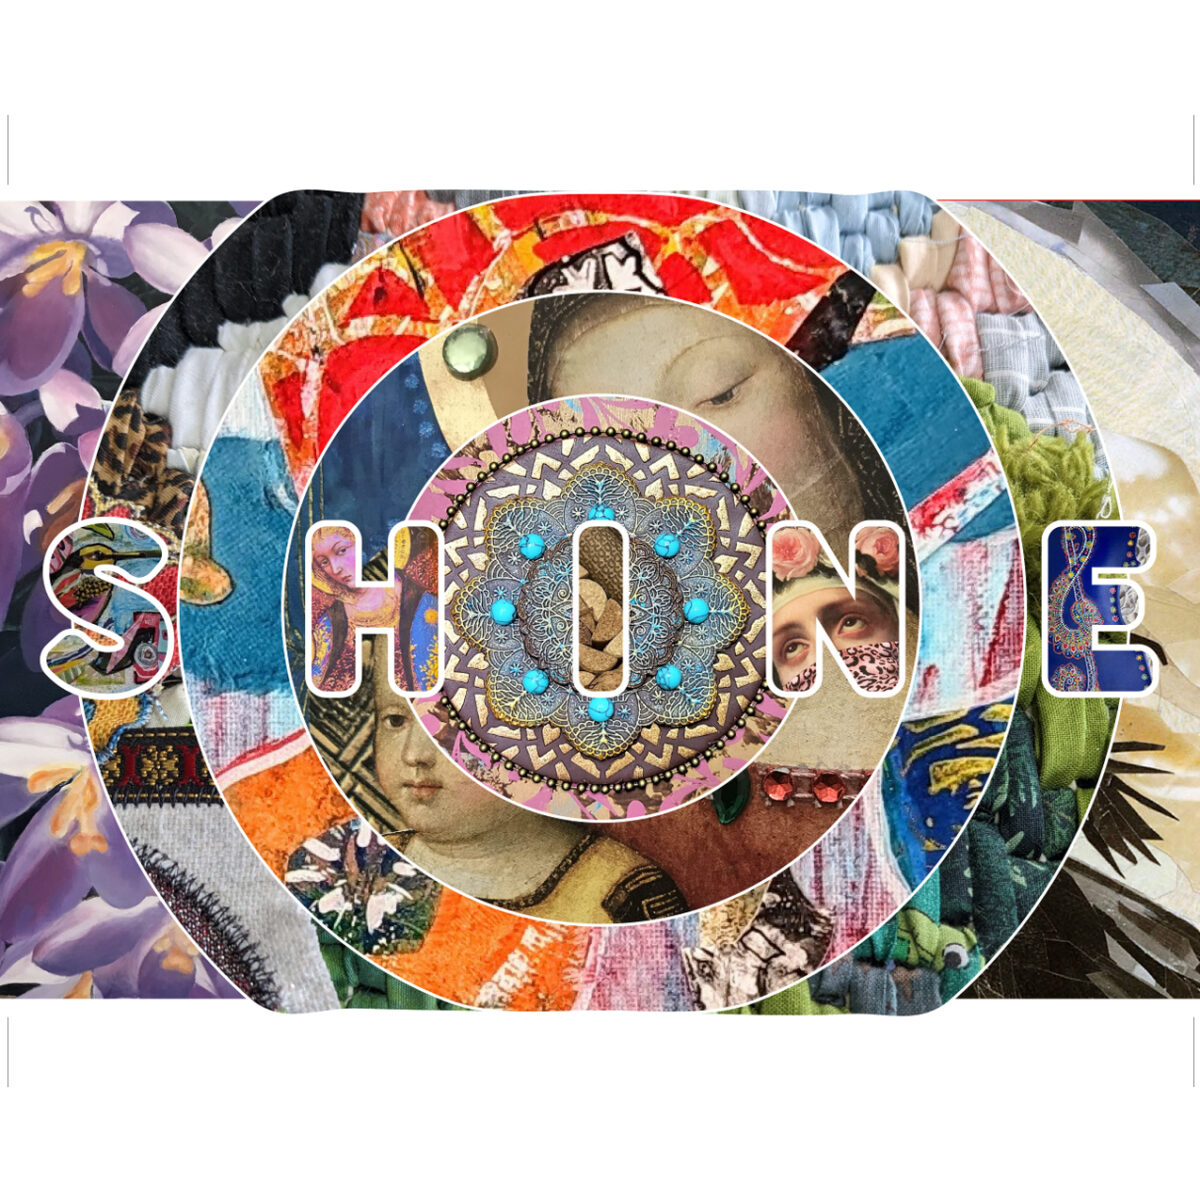 SHINE: Kennedy Collective Exhibition